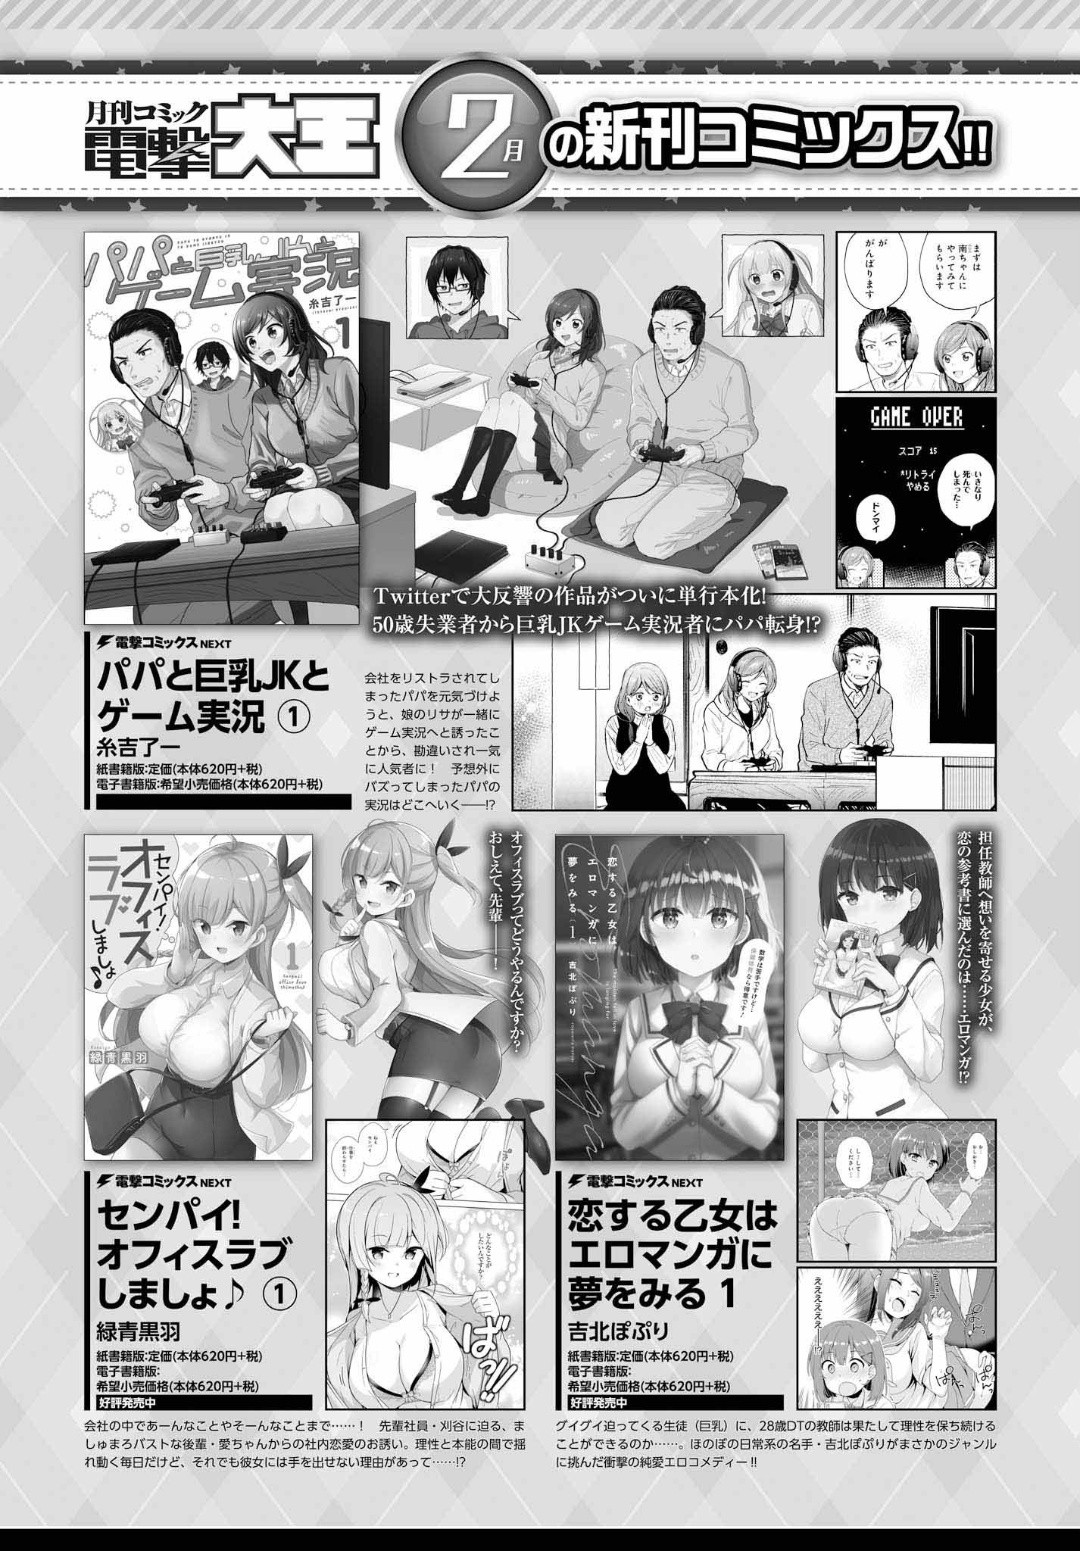 Dengeki Daioh - Chapter 2020-04 - Page 1112